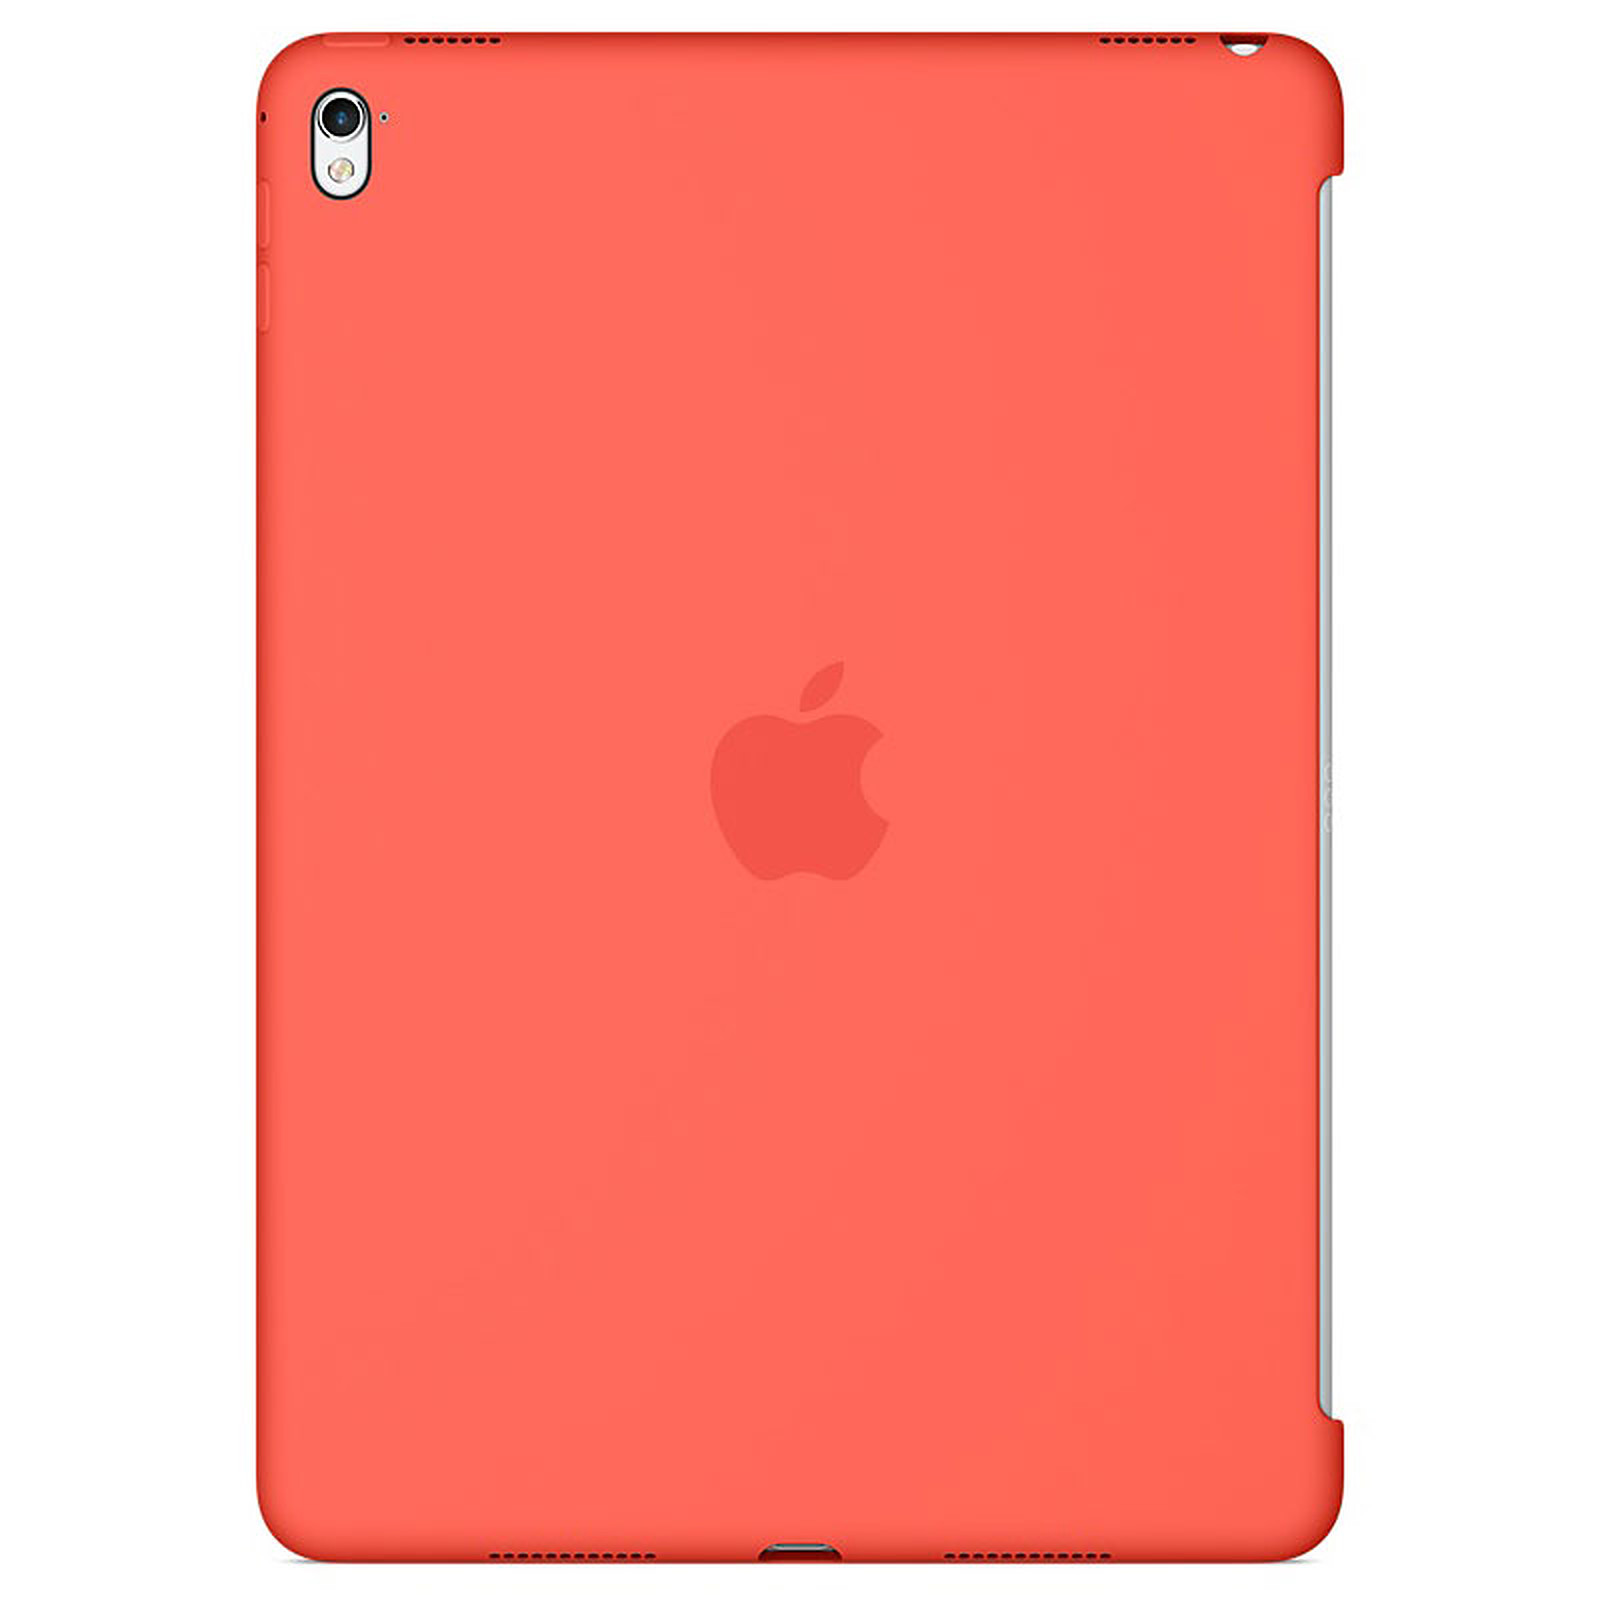 Apple iPad Pro 9.7" Silicone Case Abricot - Etui tablette Apple